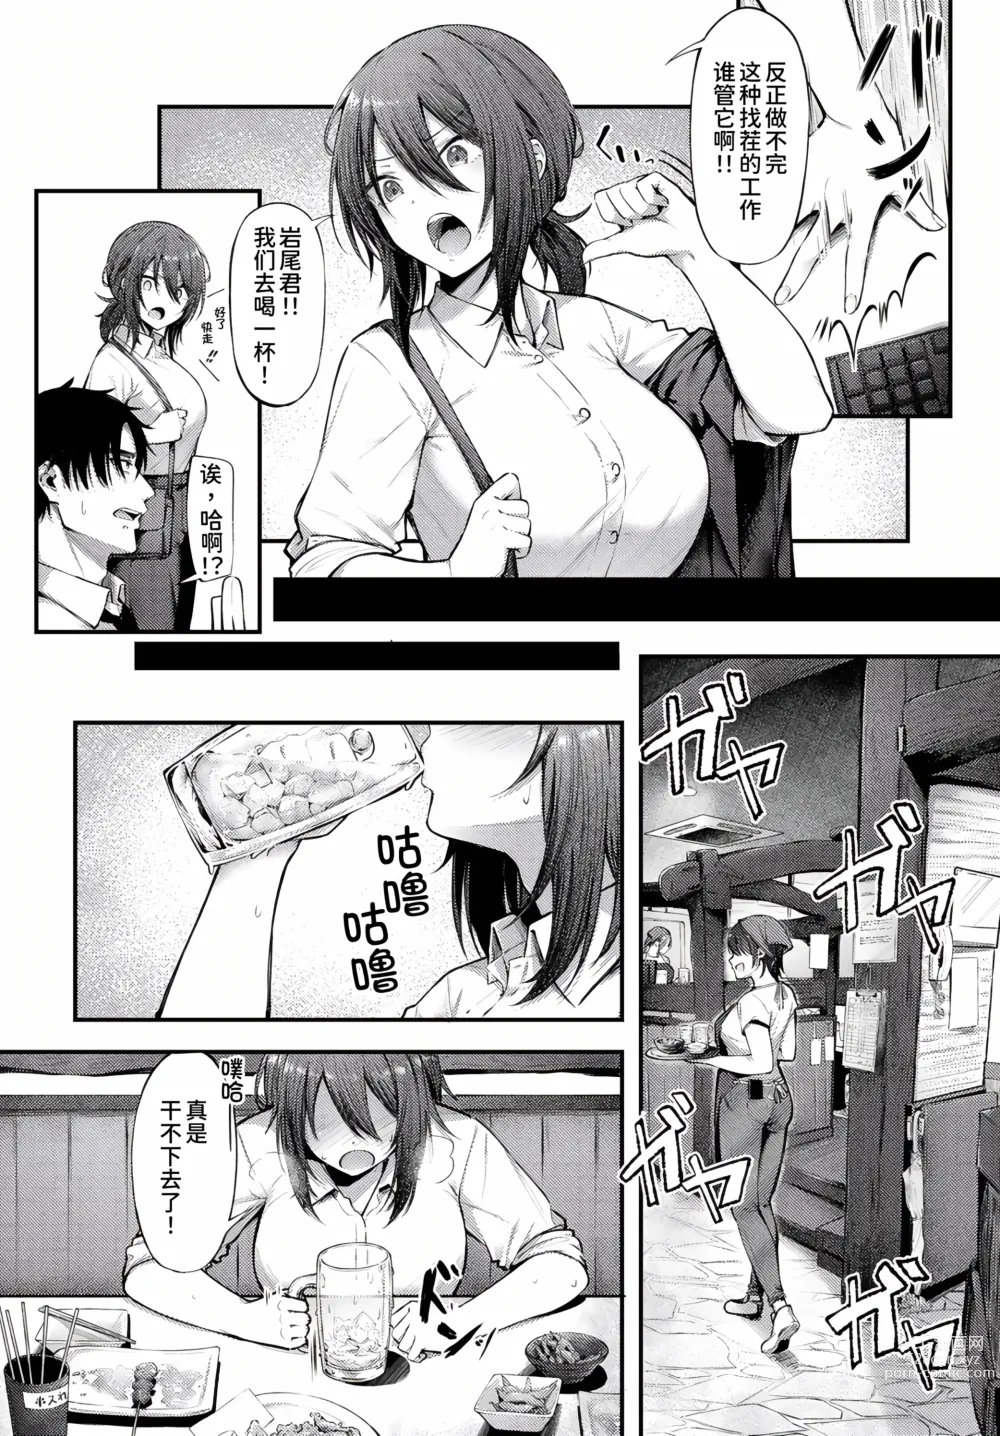 Page 3 of manga Make Love